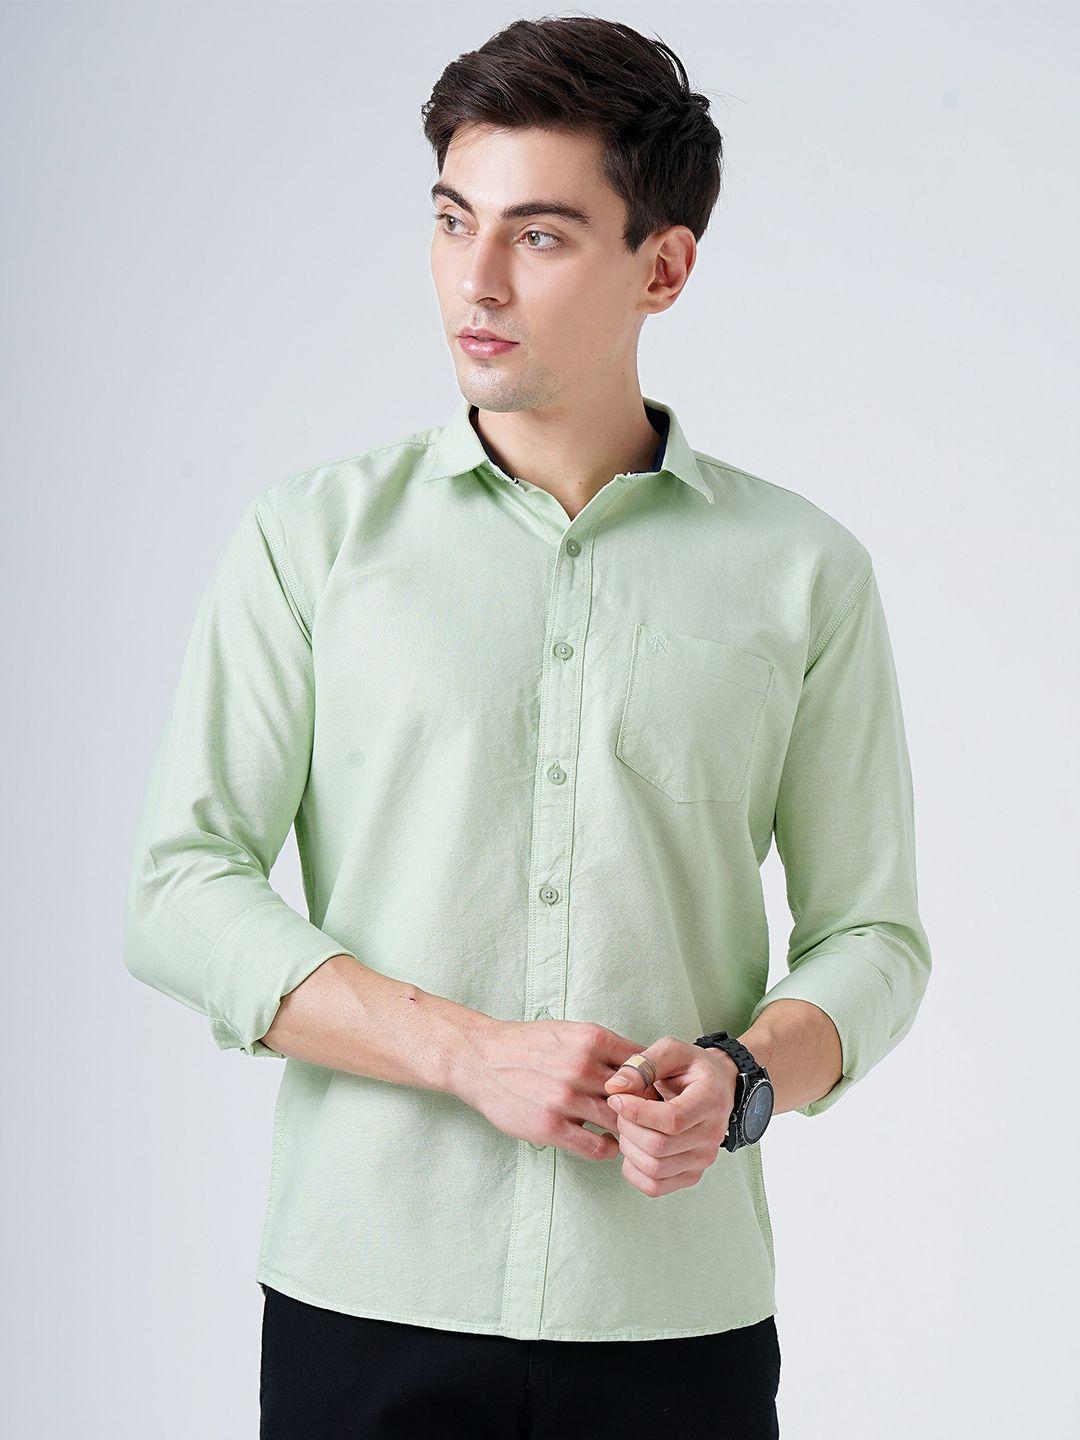 soratia men green slim fit casual shirt